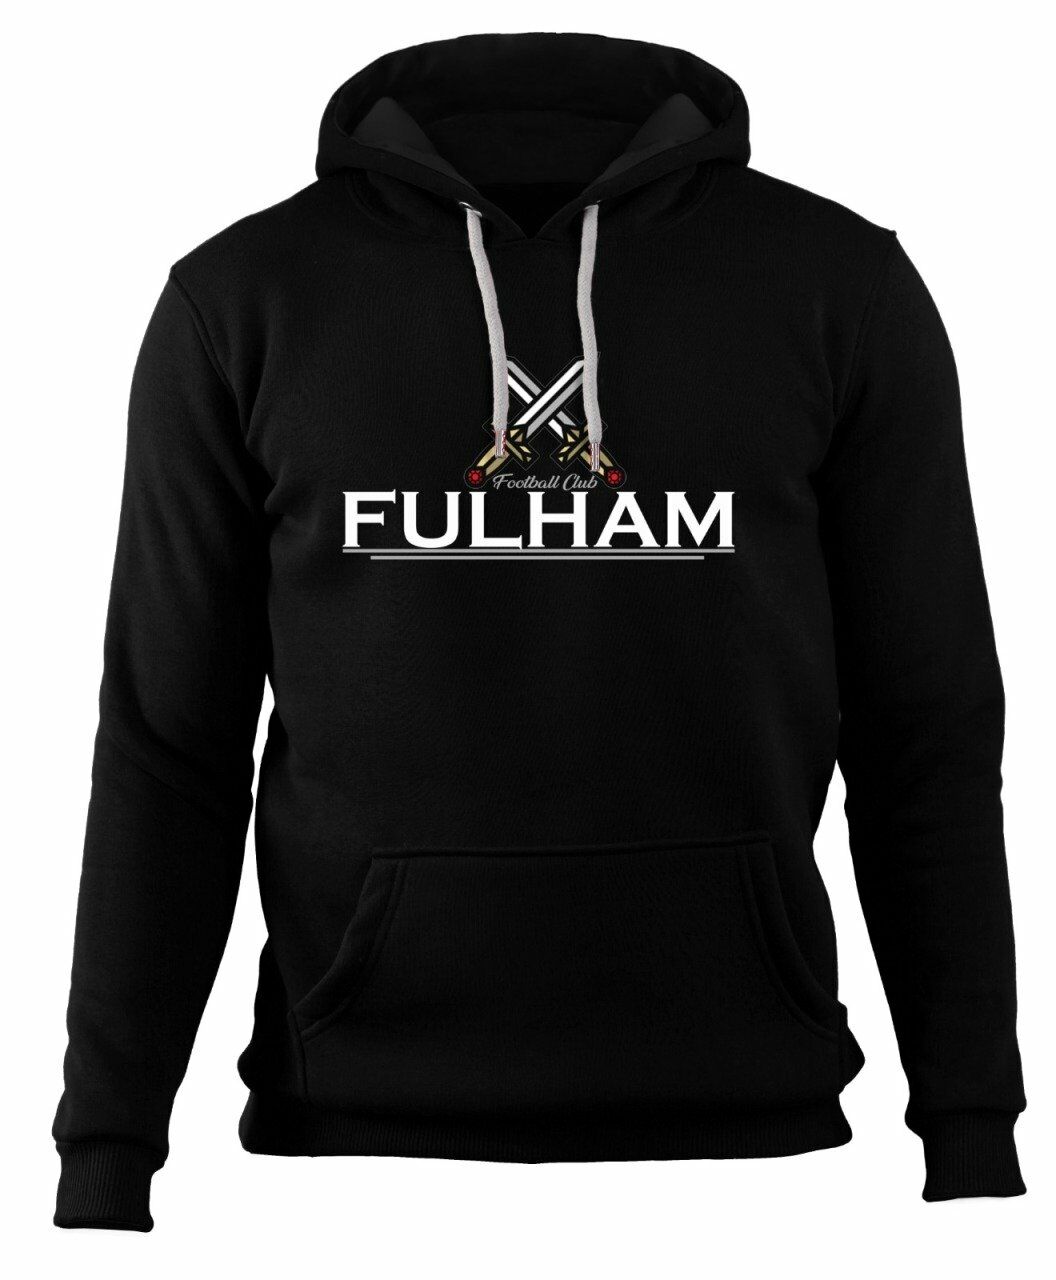 Fulham Sweatshirt